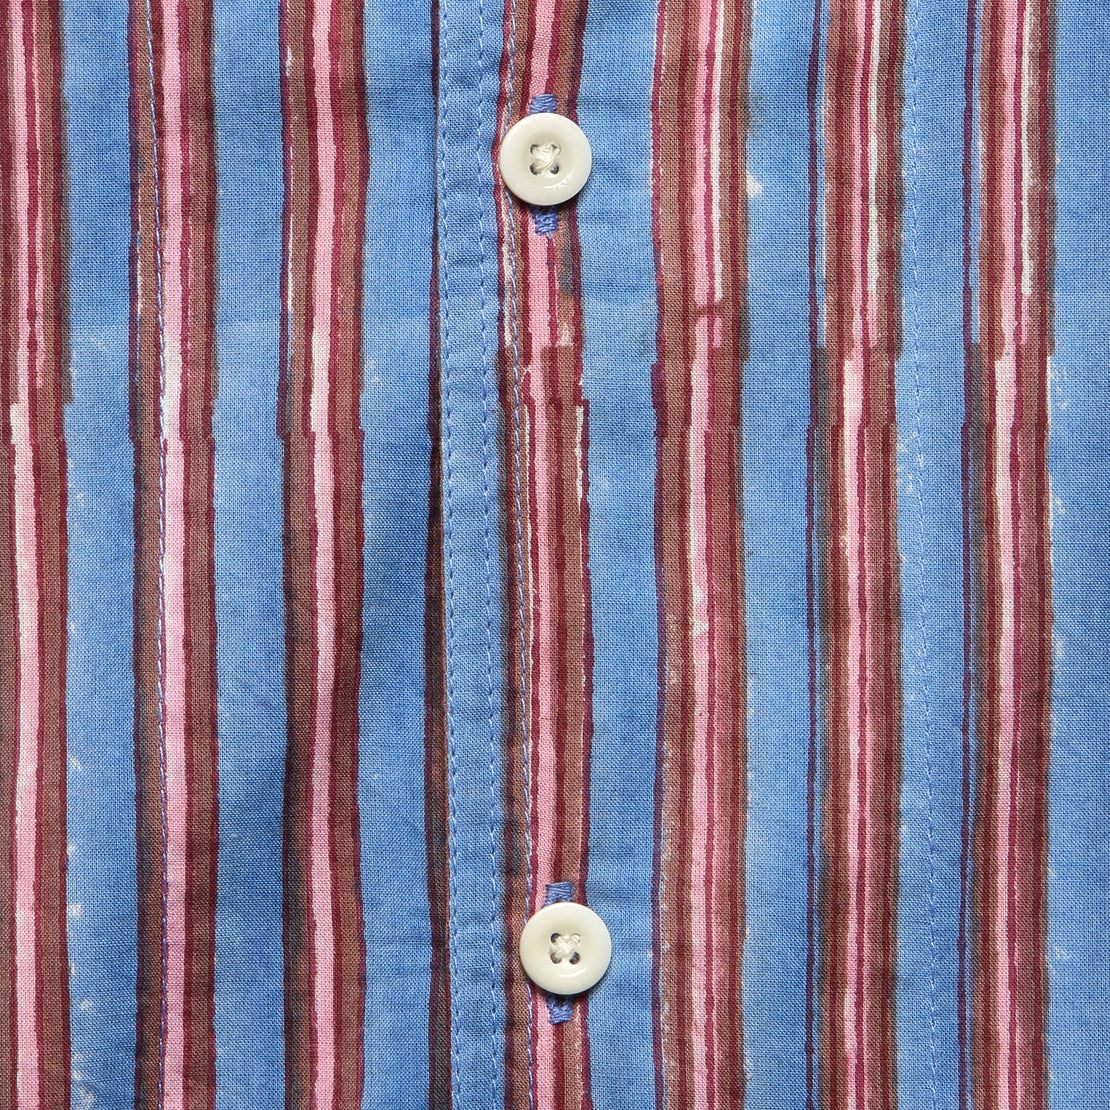 Striped Block Print Shirt - Indigo - Kardo - STAG Provisions - Tops - S/S Woven - Stripe